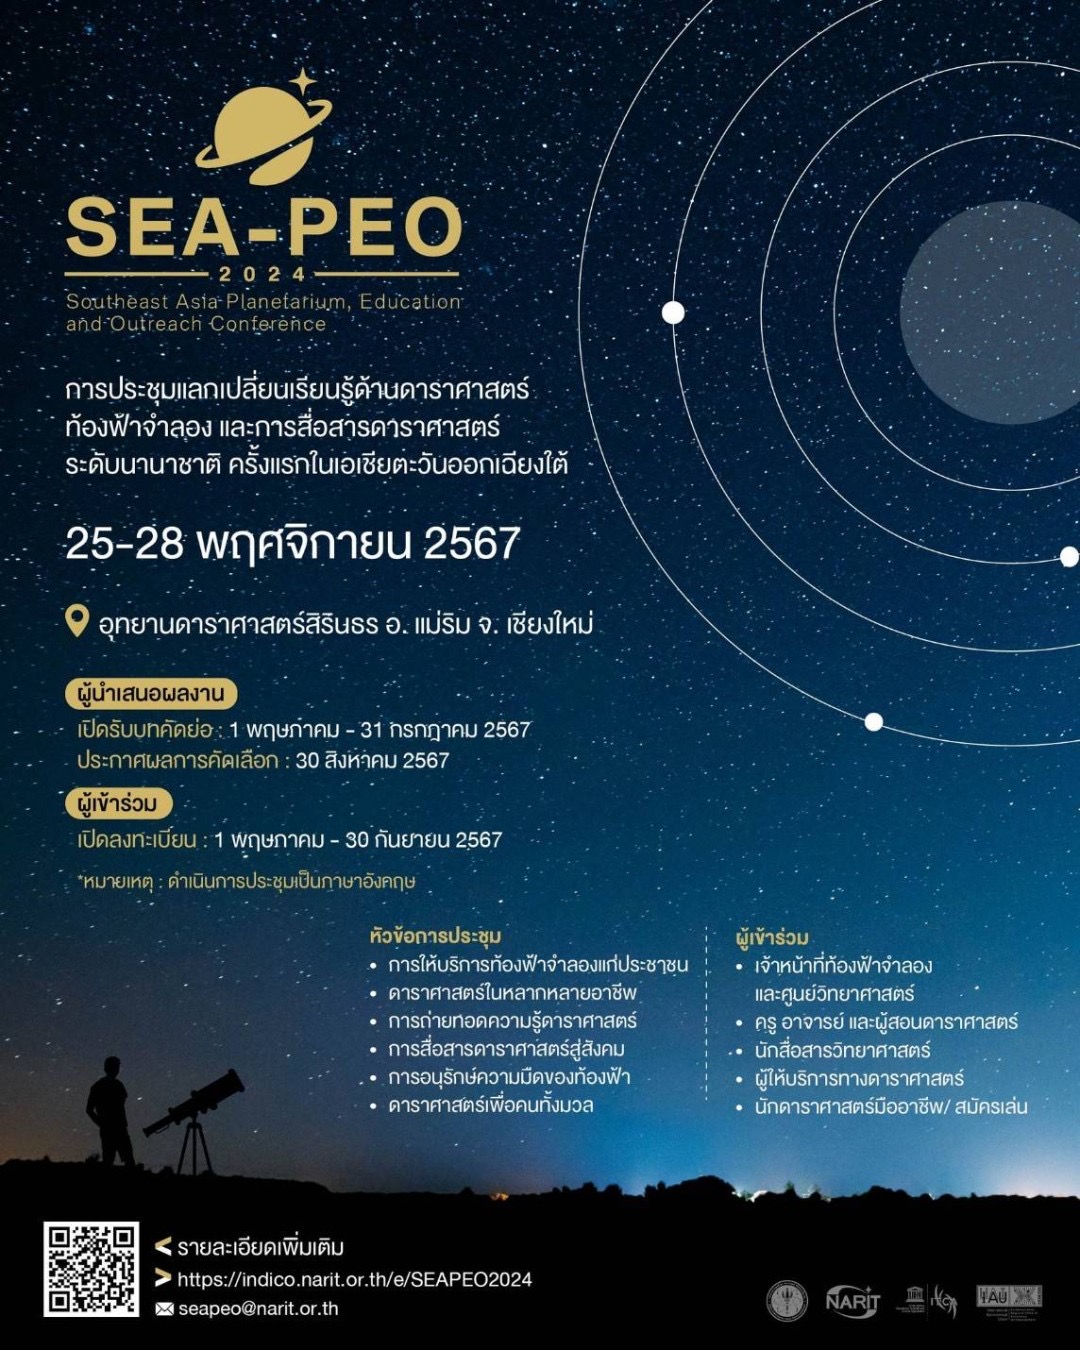 NARIT เตรียมจัดงาน Southeast Asia Planetarium, Education and Outreach 2024 (SEA-PEO 2024) ปลายปีนี้ที่เชียงใหม่ กับการรวมตัวครั้งยิ่งใหญ่ของบุคลากรและองค์กรแวดวงดาราศาสตร์ในภูมิภาคอาเซียน 